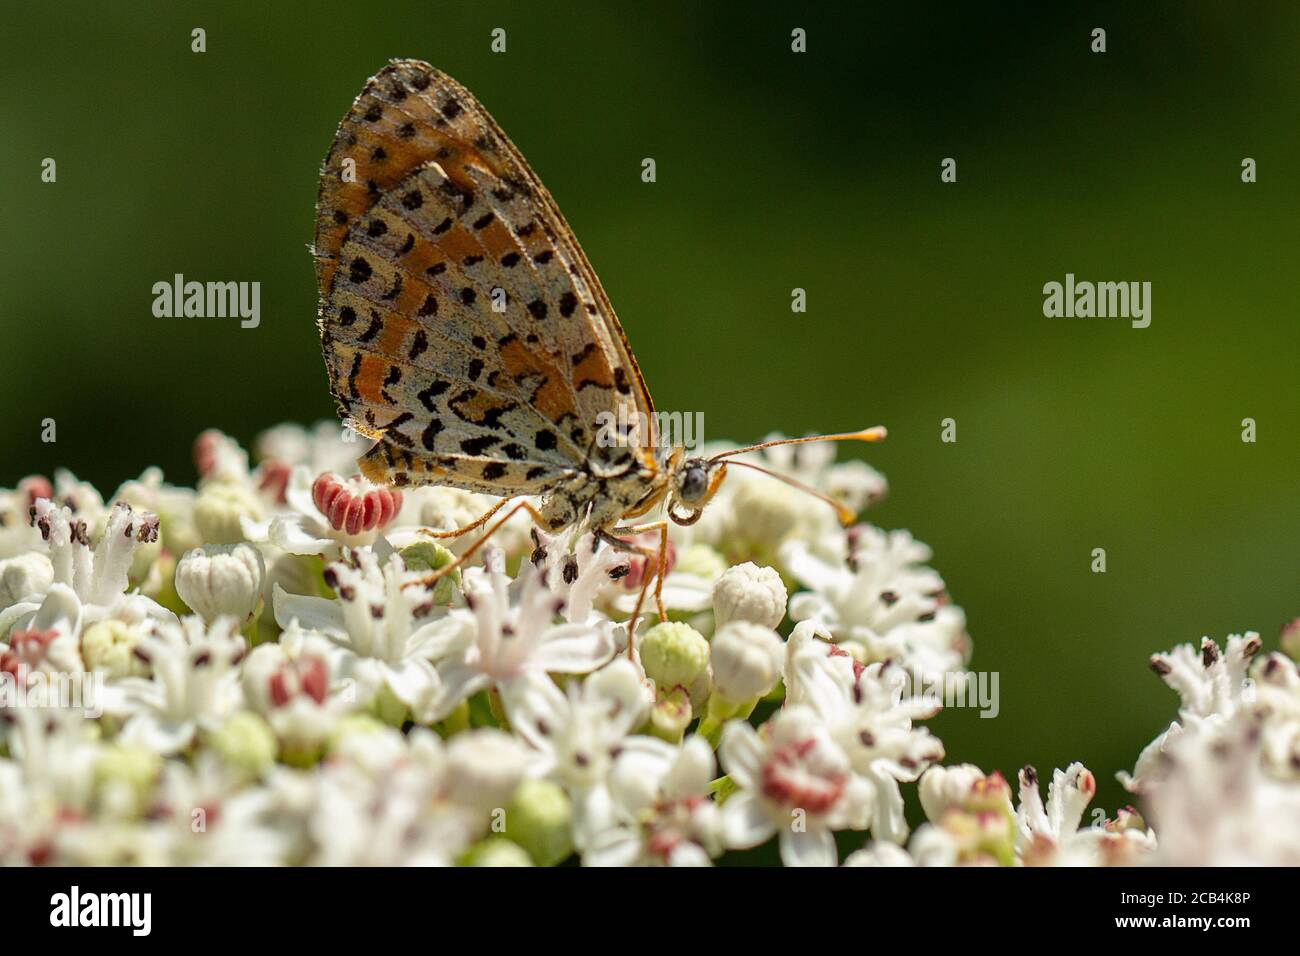 Spotted Fritillary butterfly on Danewort or Dwarf Elder Stock Photo